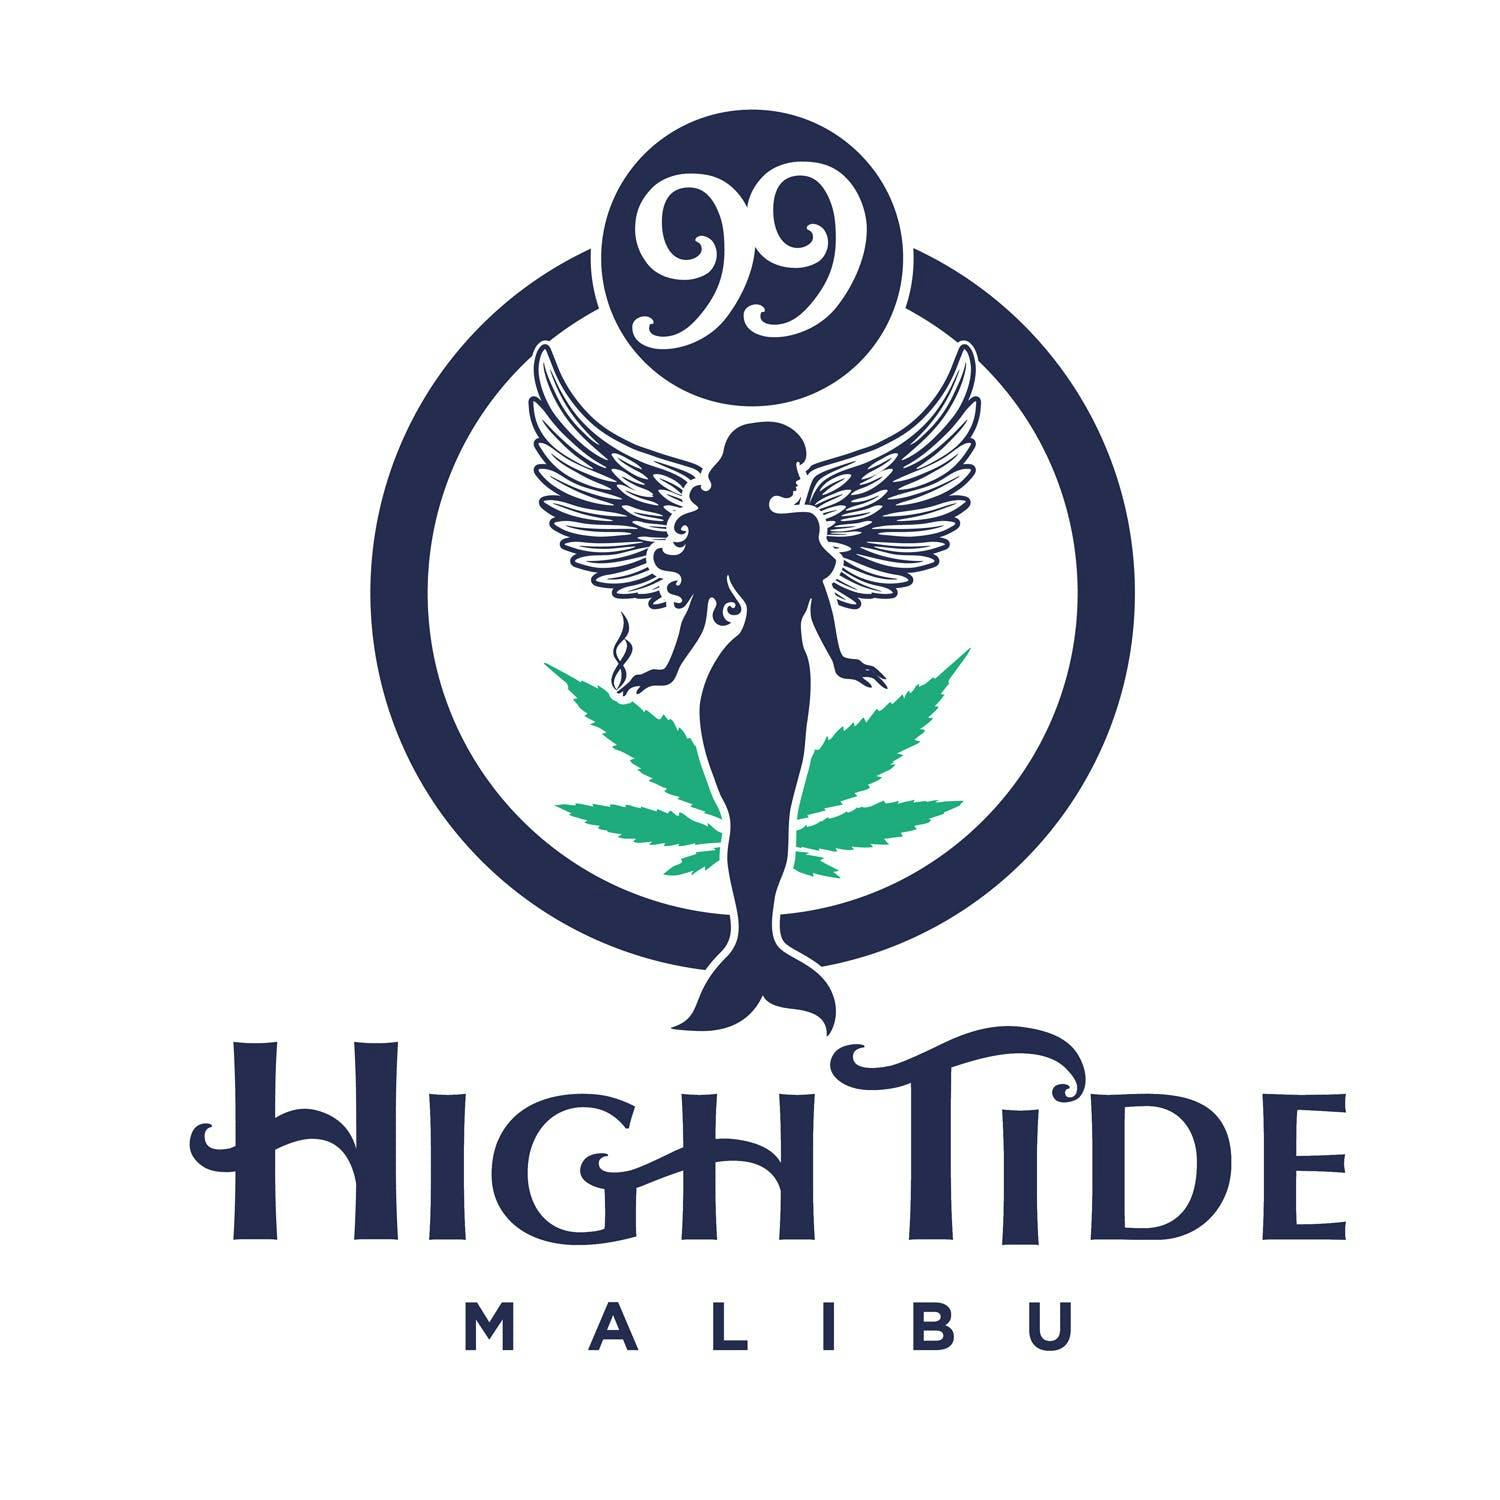 99 High Tide